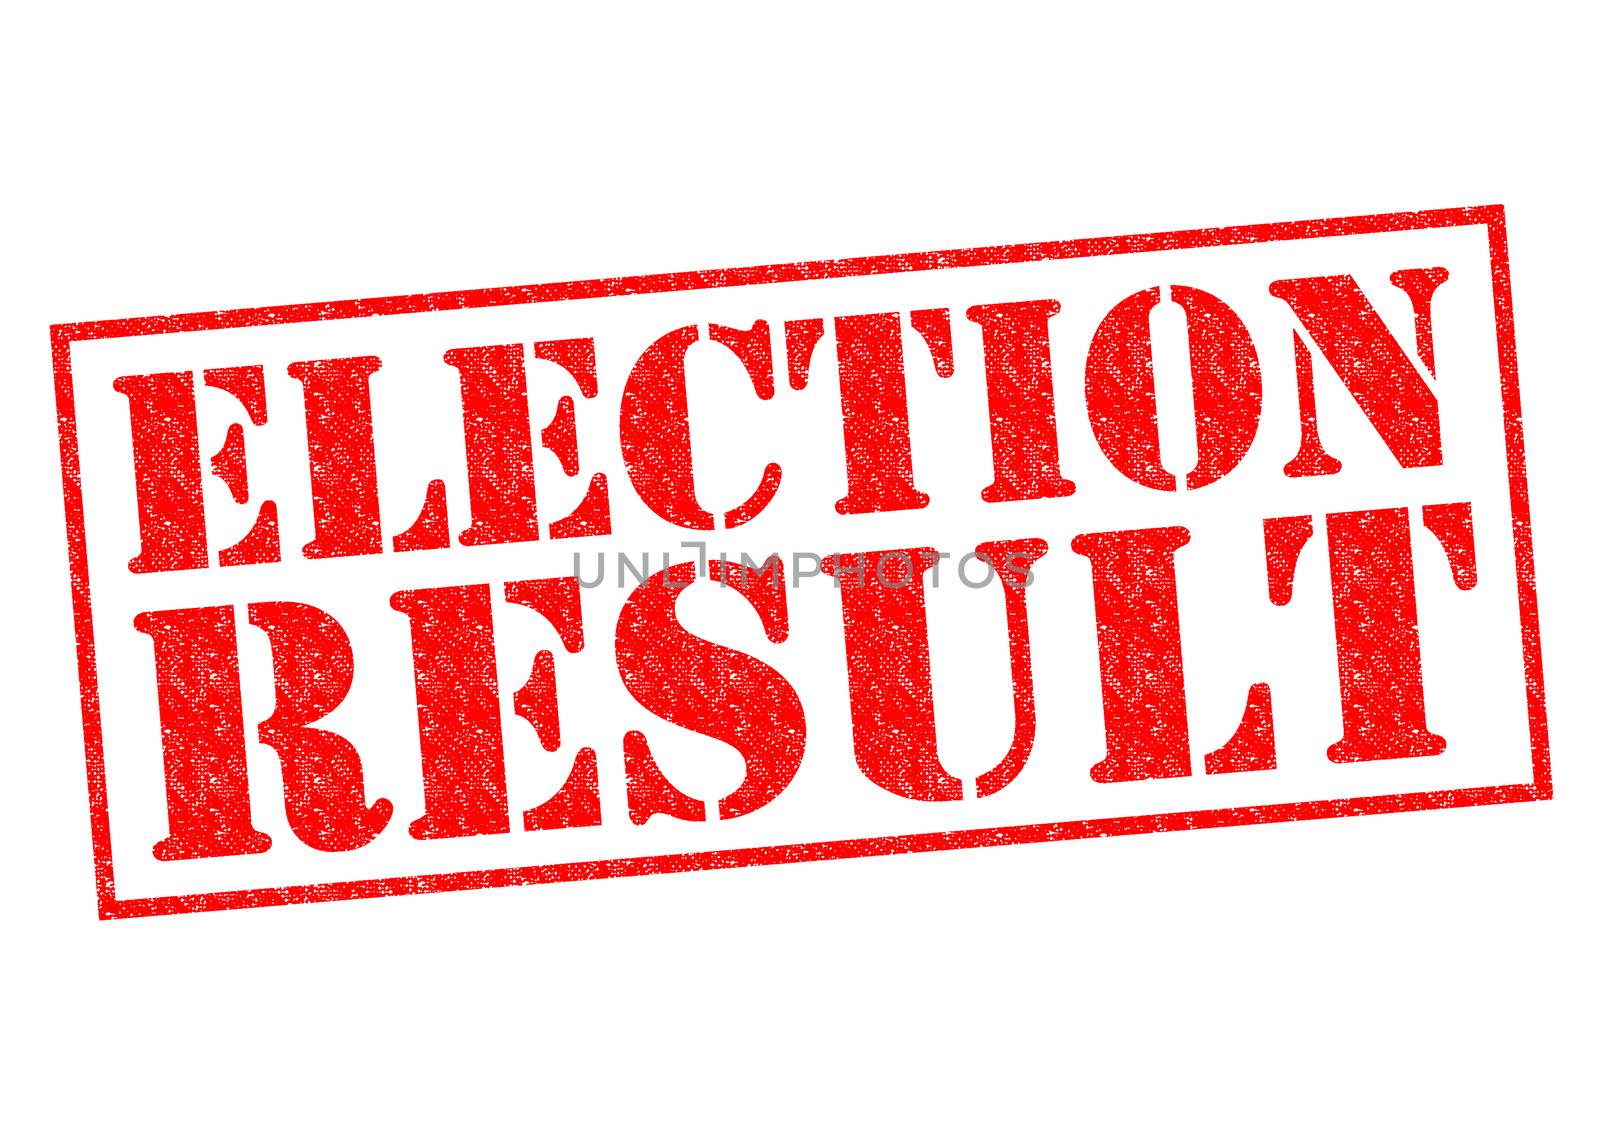 ELECTION RESULT by chrisdorney